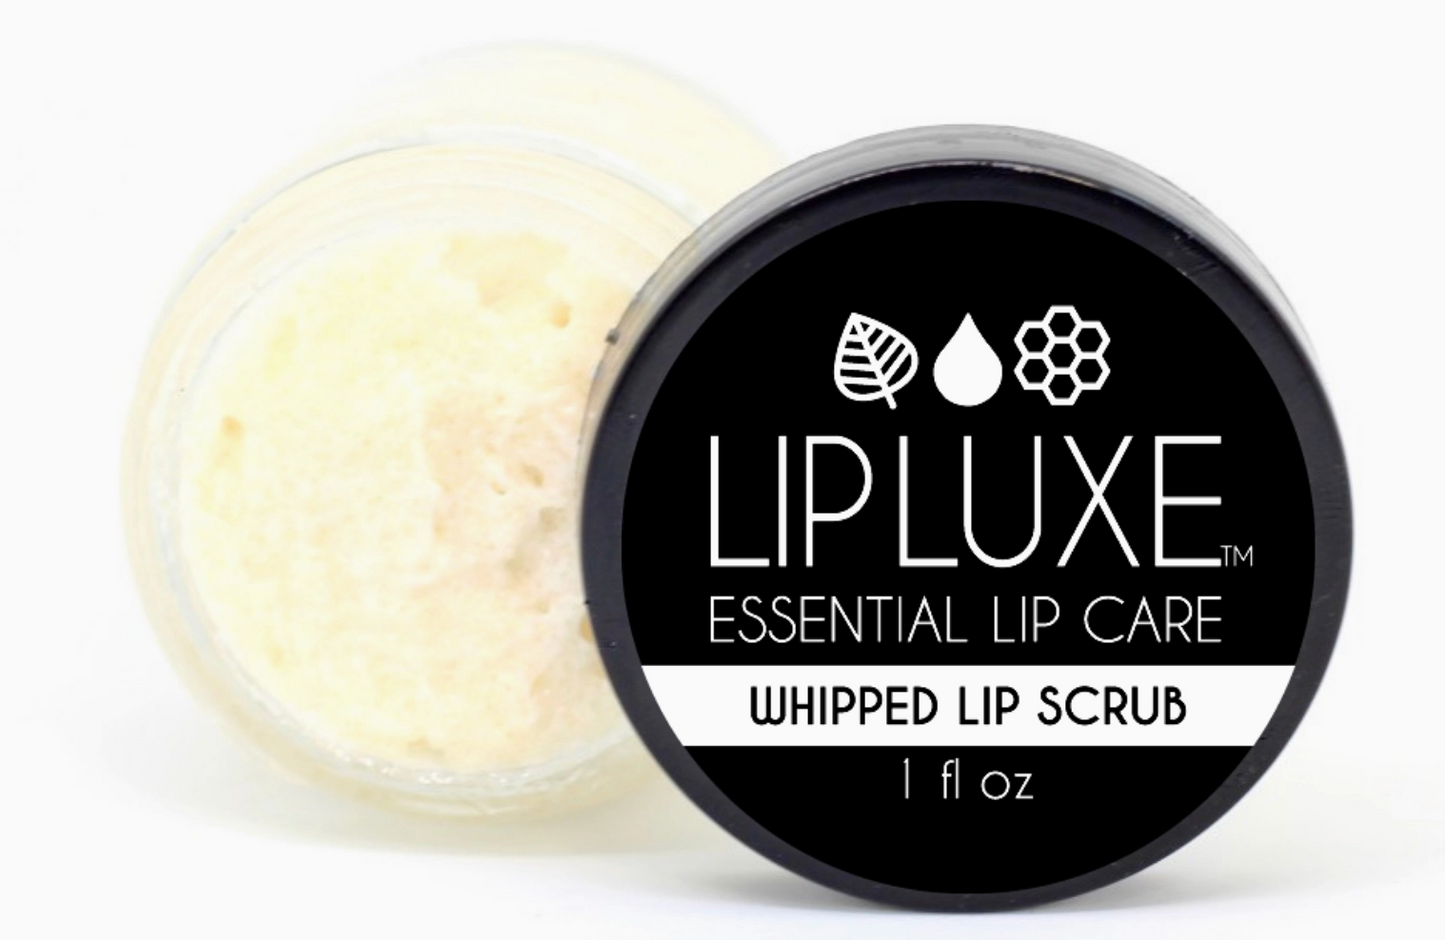 Lip Luxe Whipped Lip Scrub